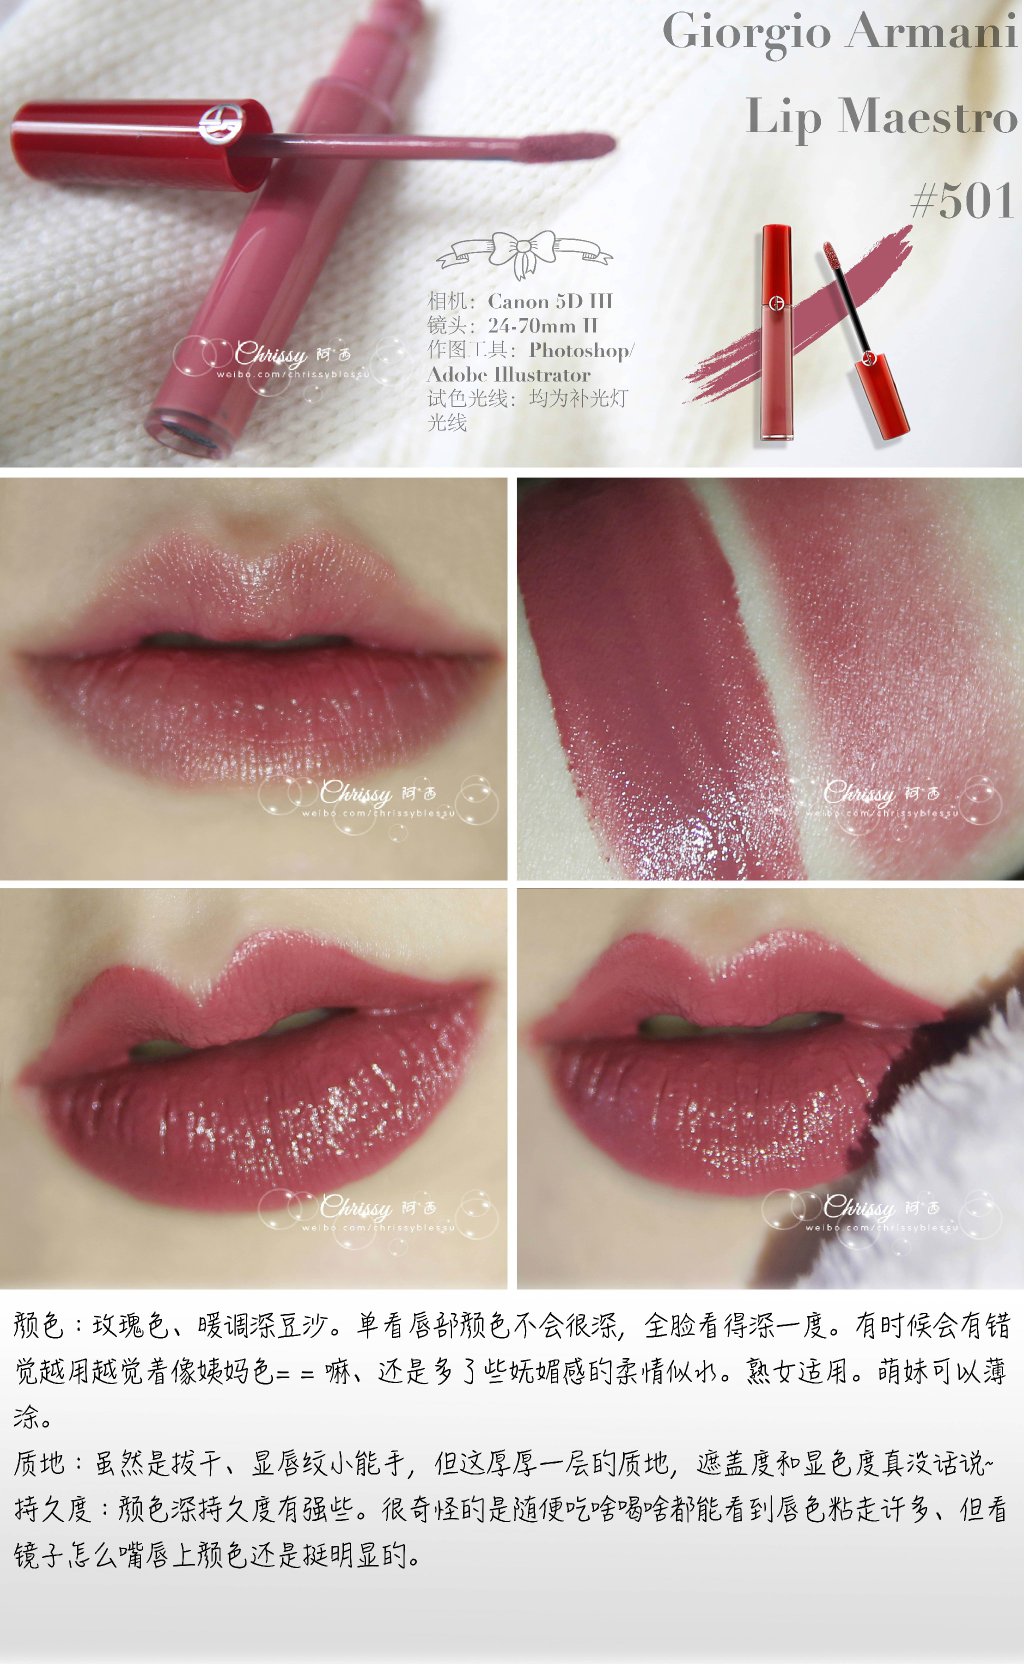 YSL Rouge Pur Couture 66Rosewood/ Giorgio Armani Lip Maestro阿玛尼丝绒哑光唇釉#500/Giorgio Armani Li ...